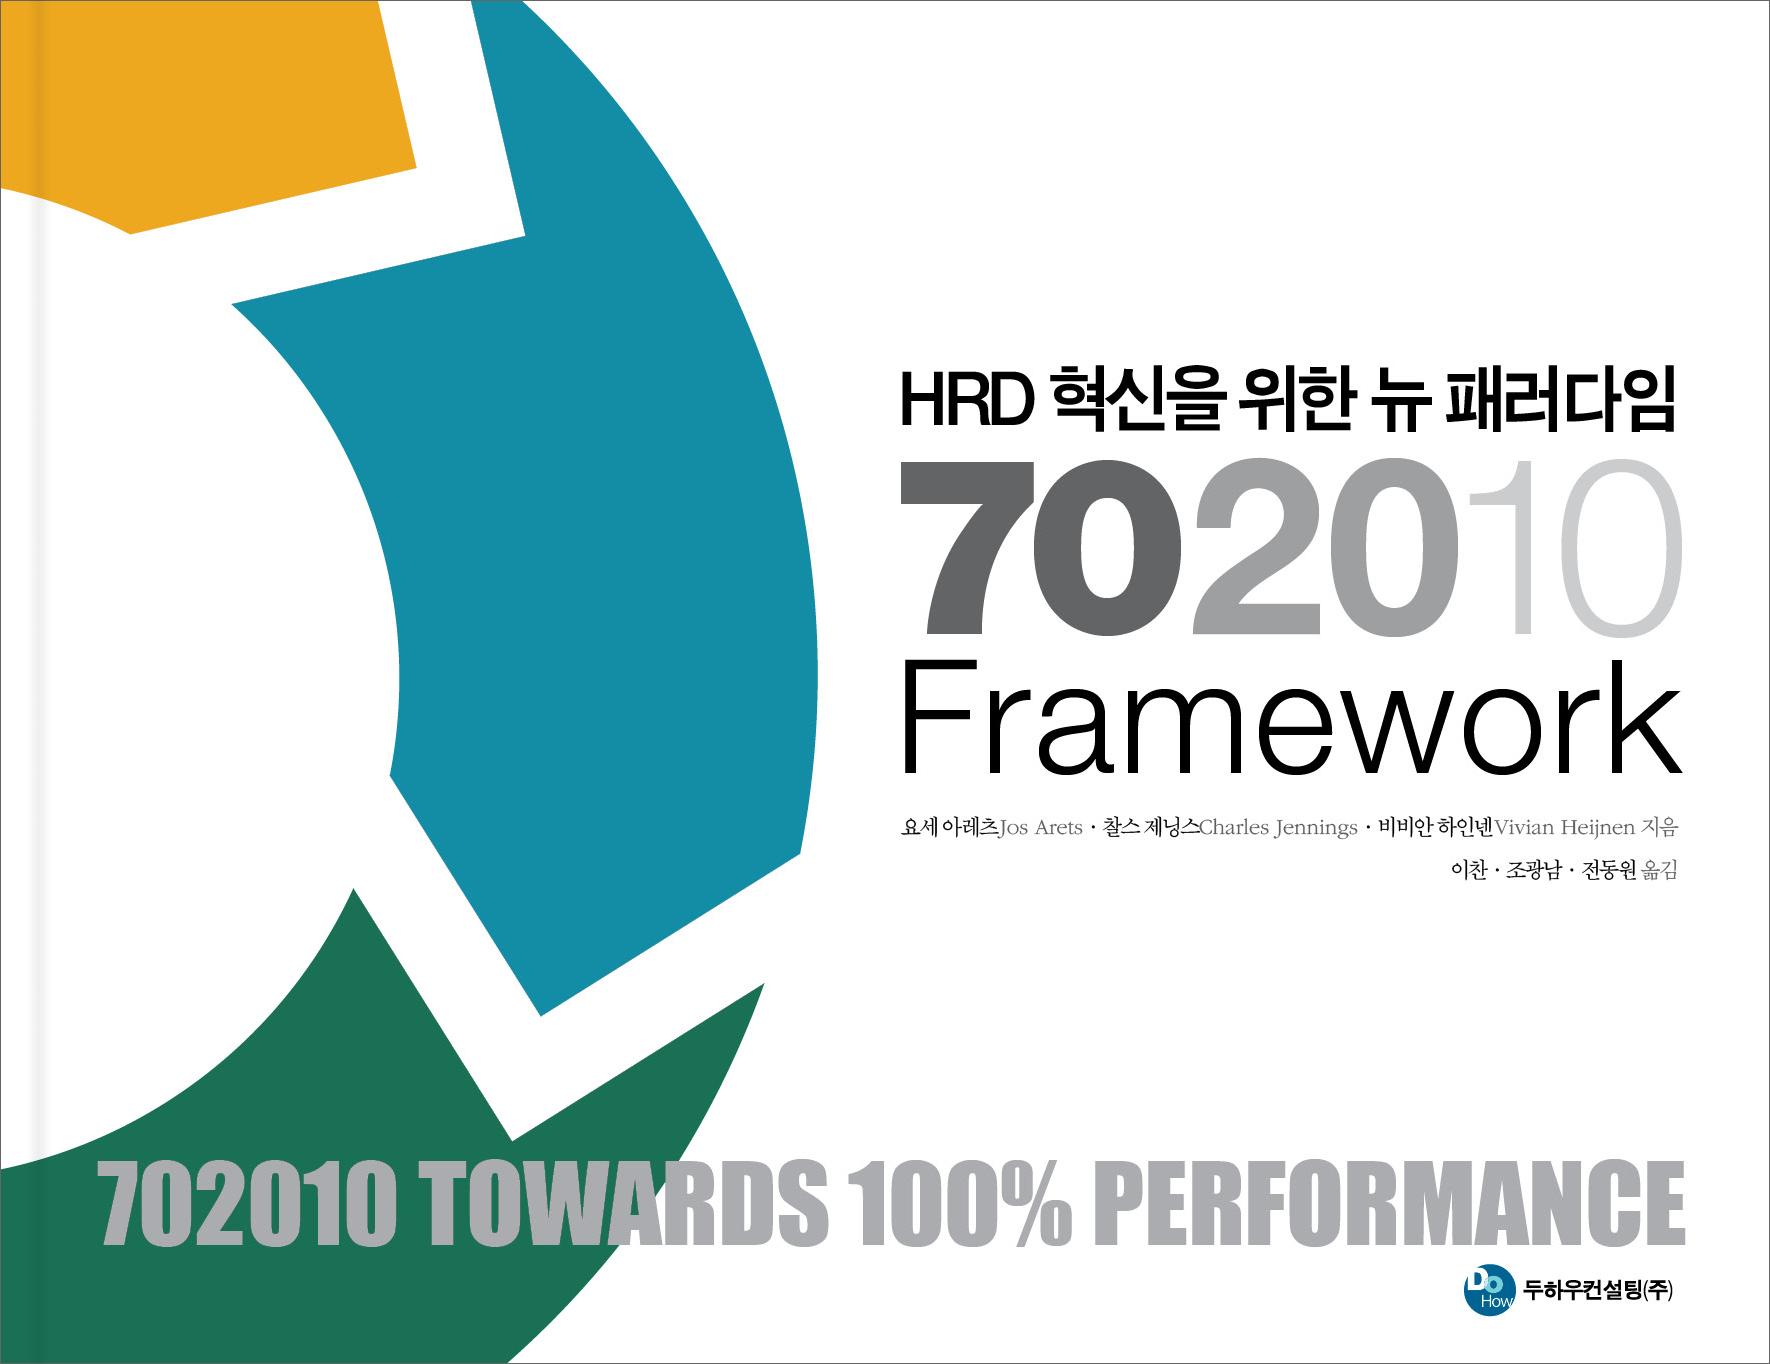 HRD 혁신을 위한 뉴 패러다임 702010 Framework_표지.jpg